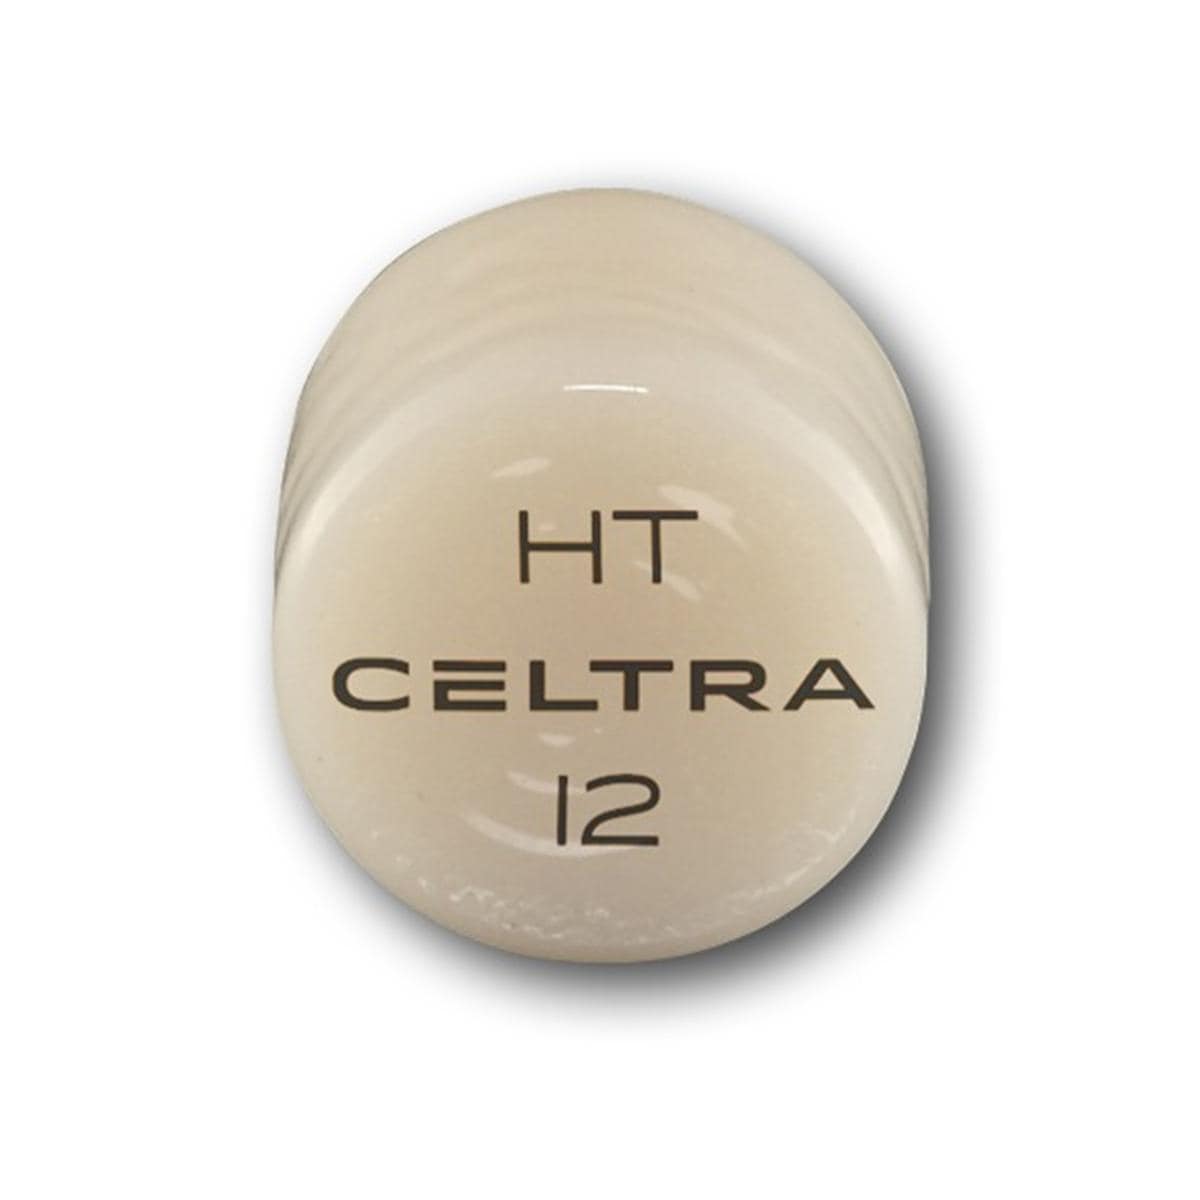 CELTRA® Press HT - I2, Packung 5 x 3 g